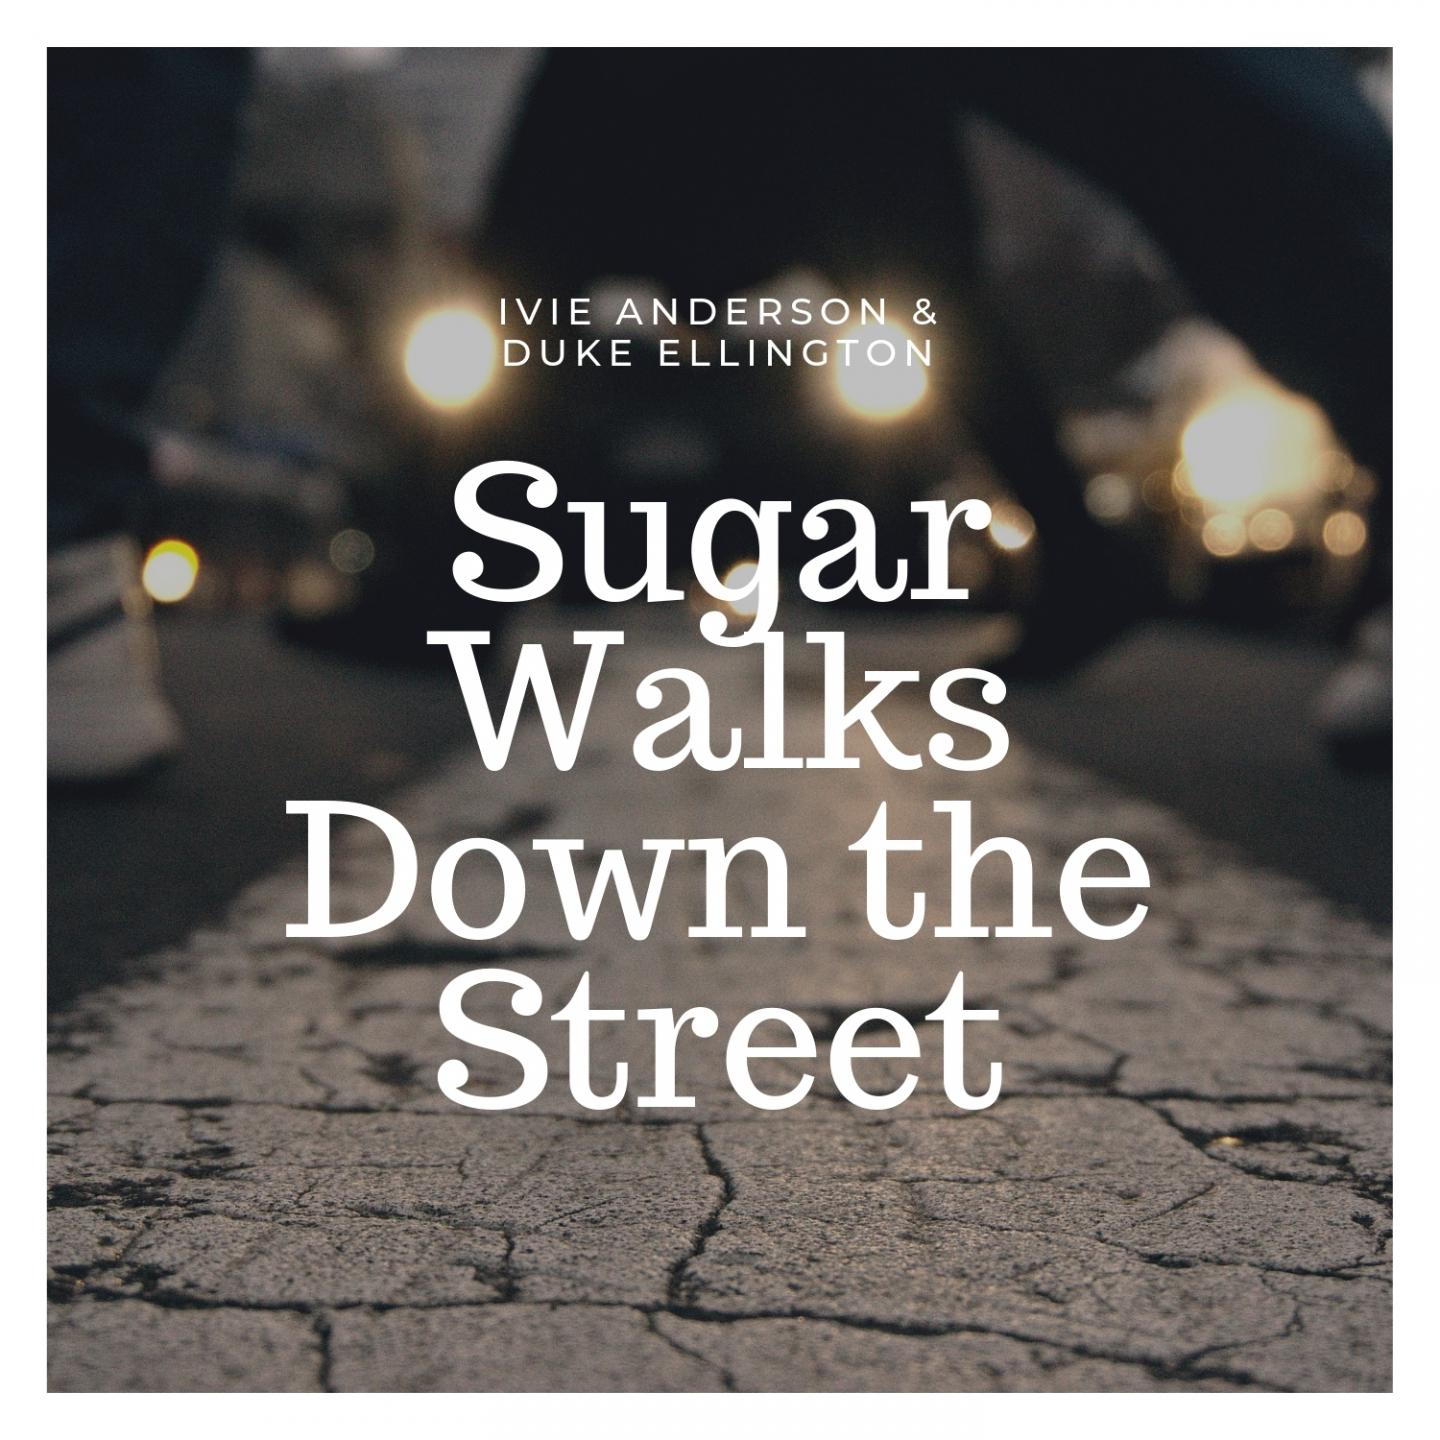 Ivie Anderson - When My Sugar Walks Down the Street